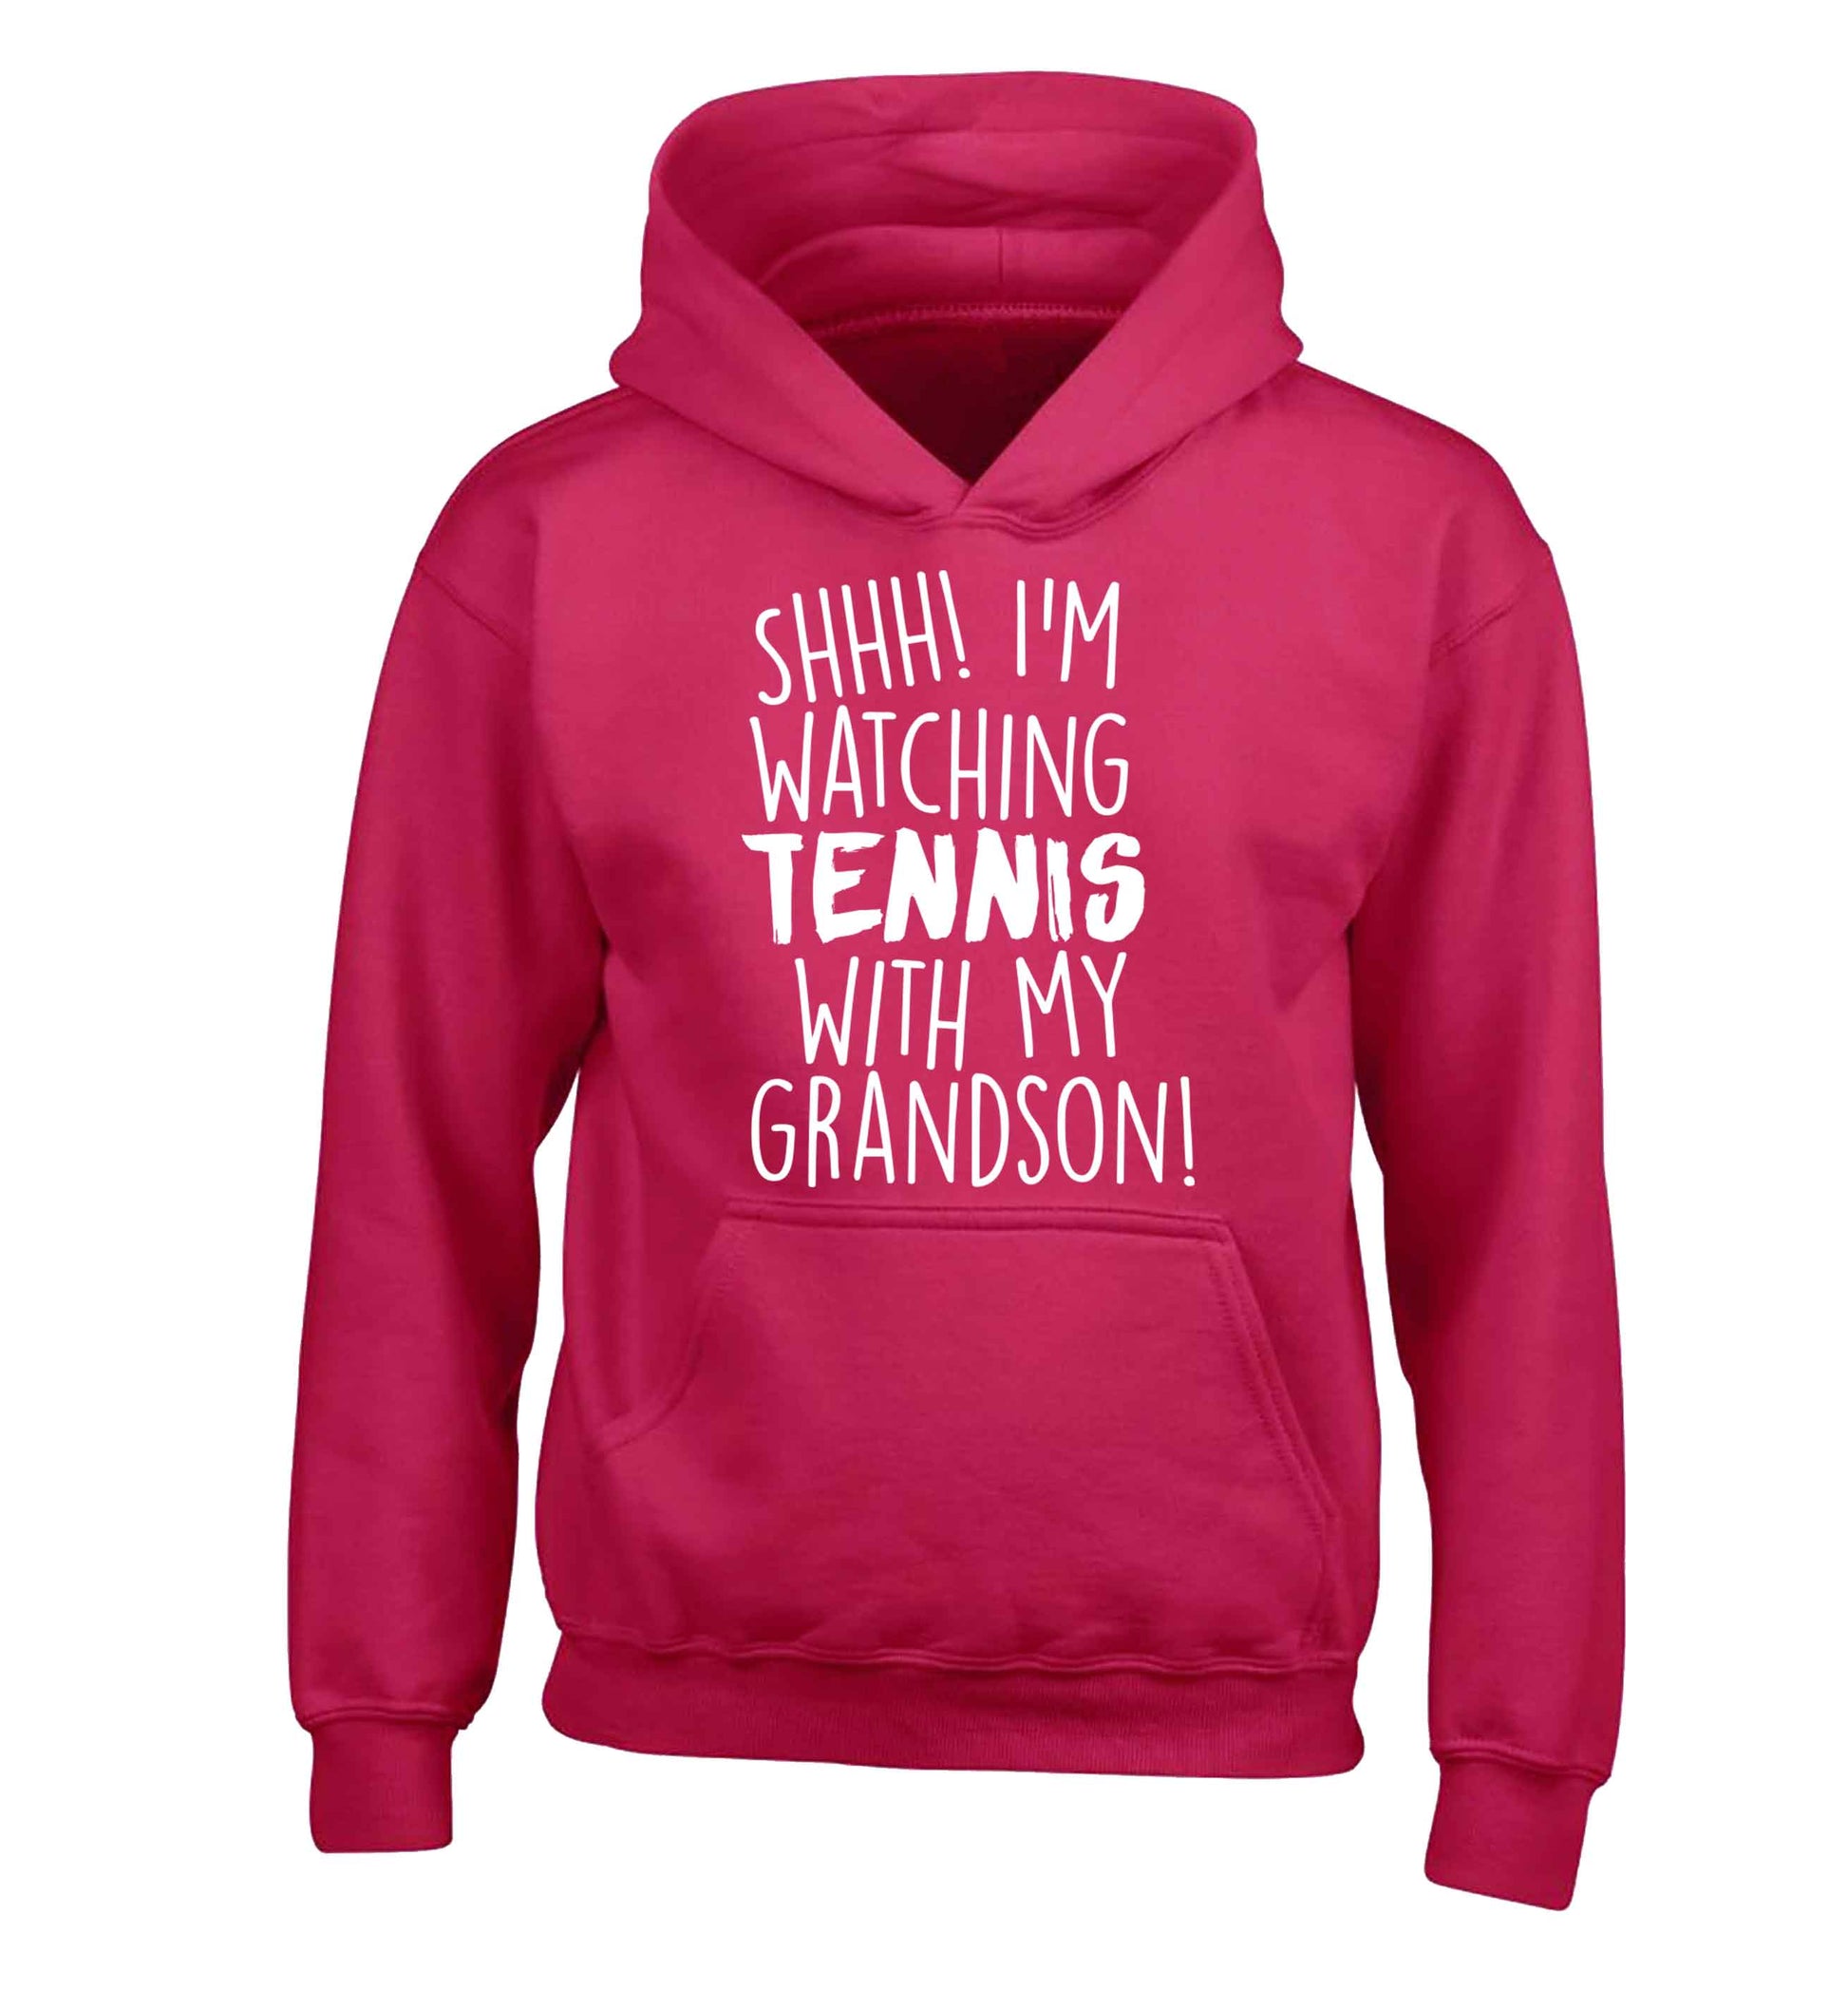 Shh! I'm watching tennis with my grandson! children's pink hoodie 12-13 Years